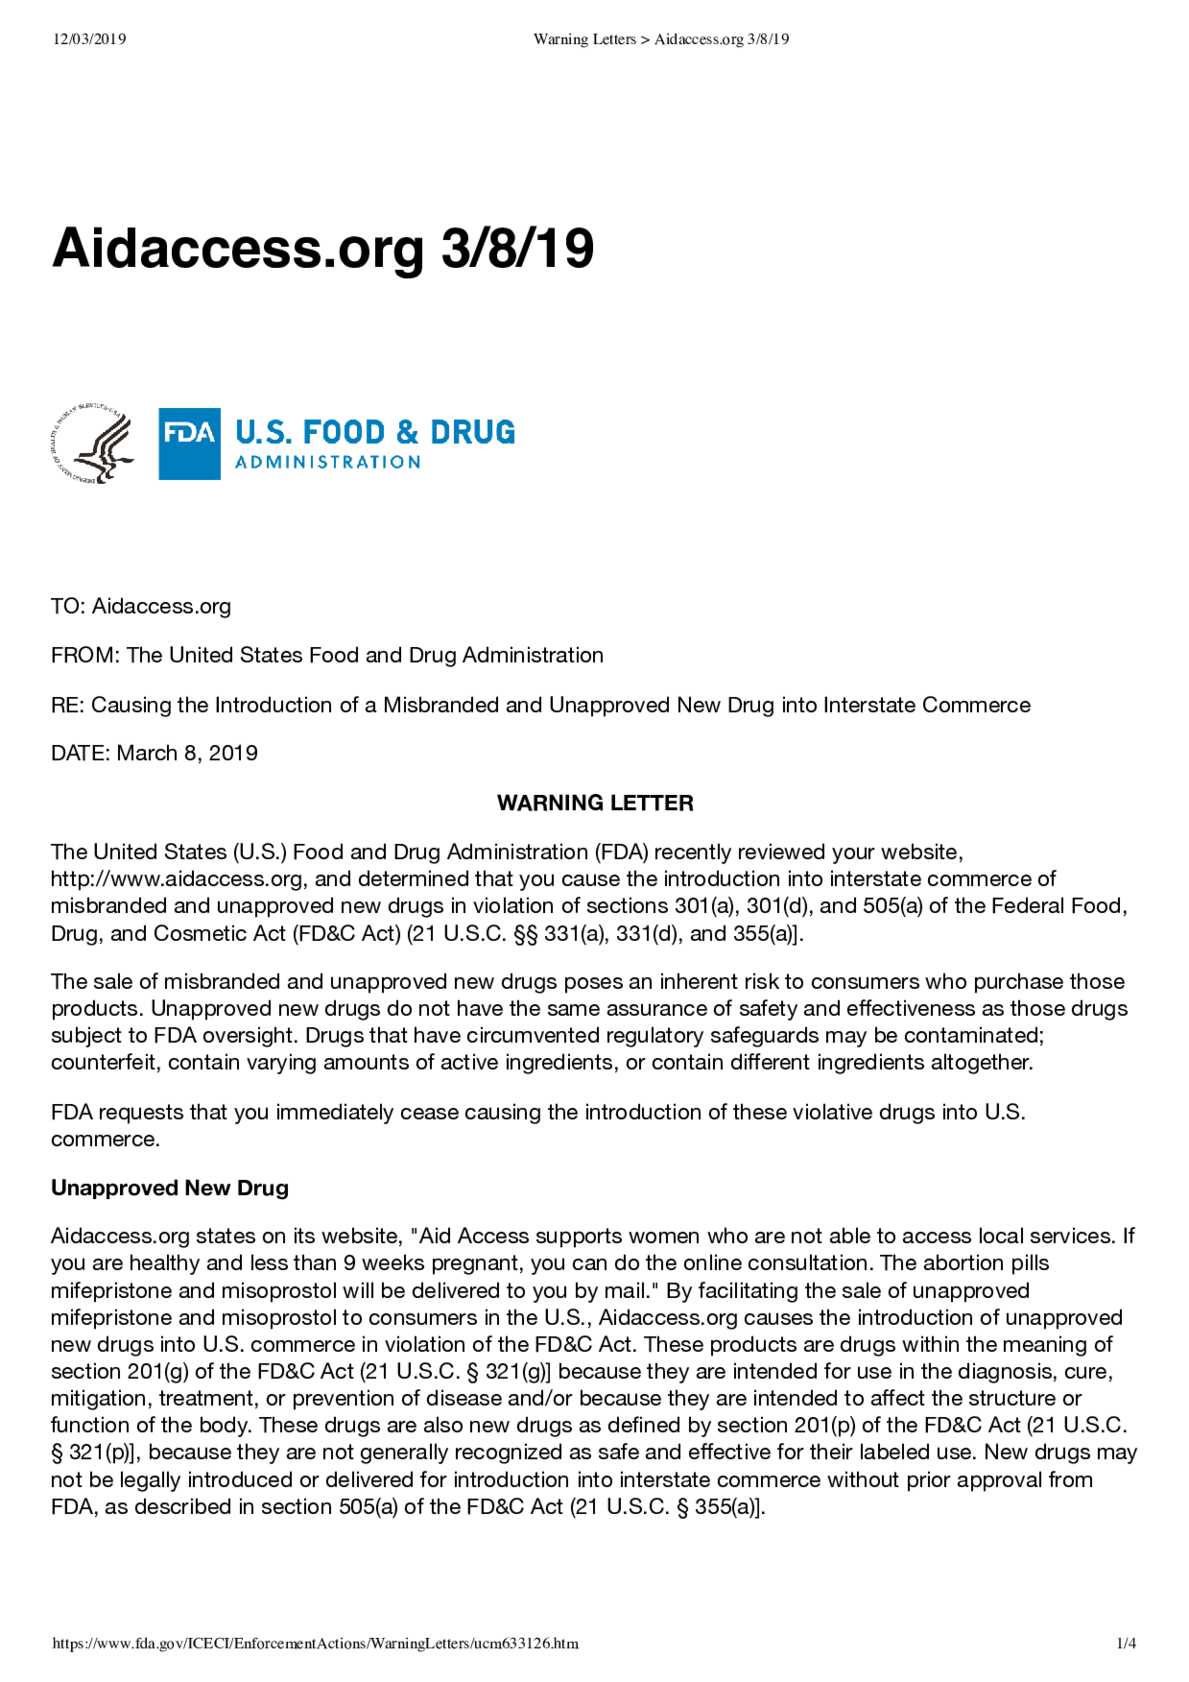 Warning letter FDA Aid Access AidAccess